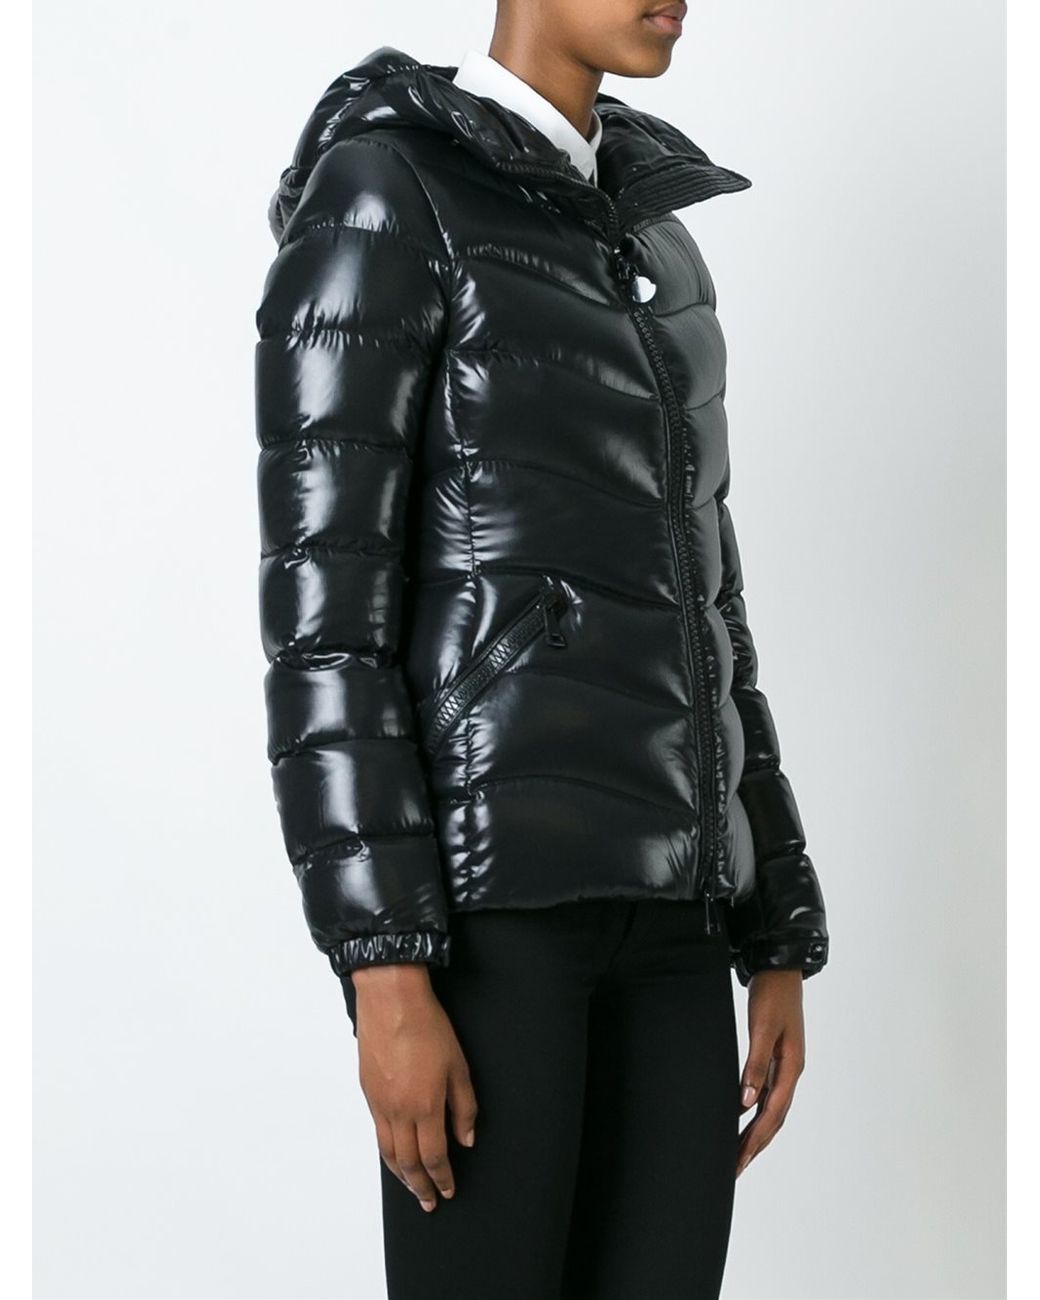 Moncler 'anthia' Padded Jacket in Black | Lyst